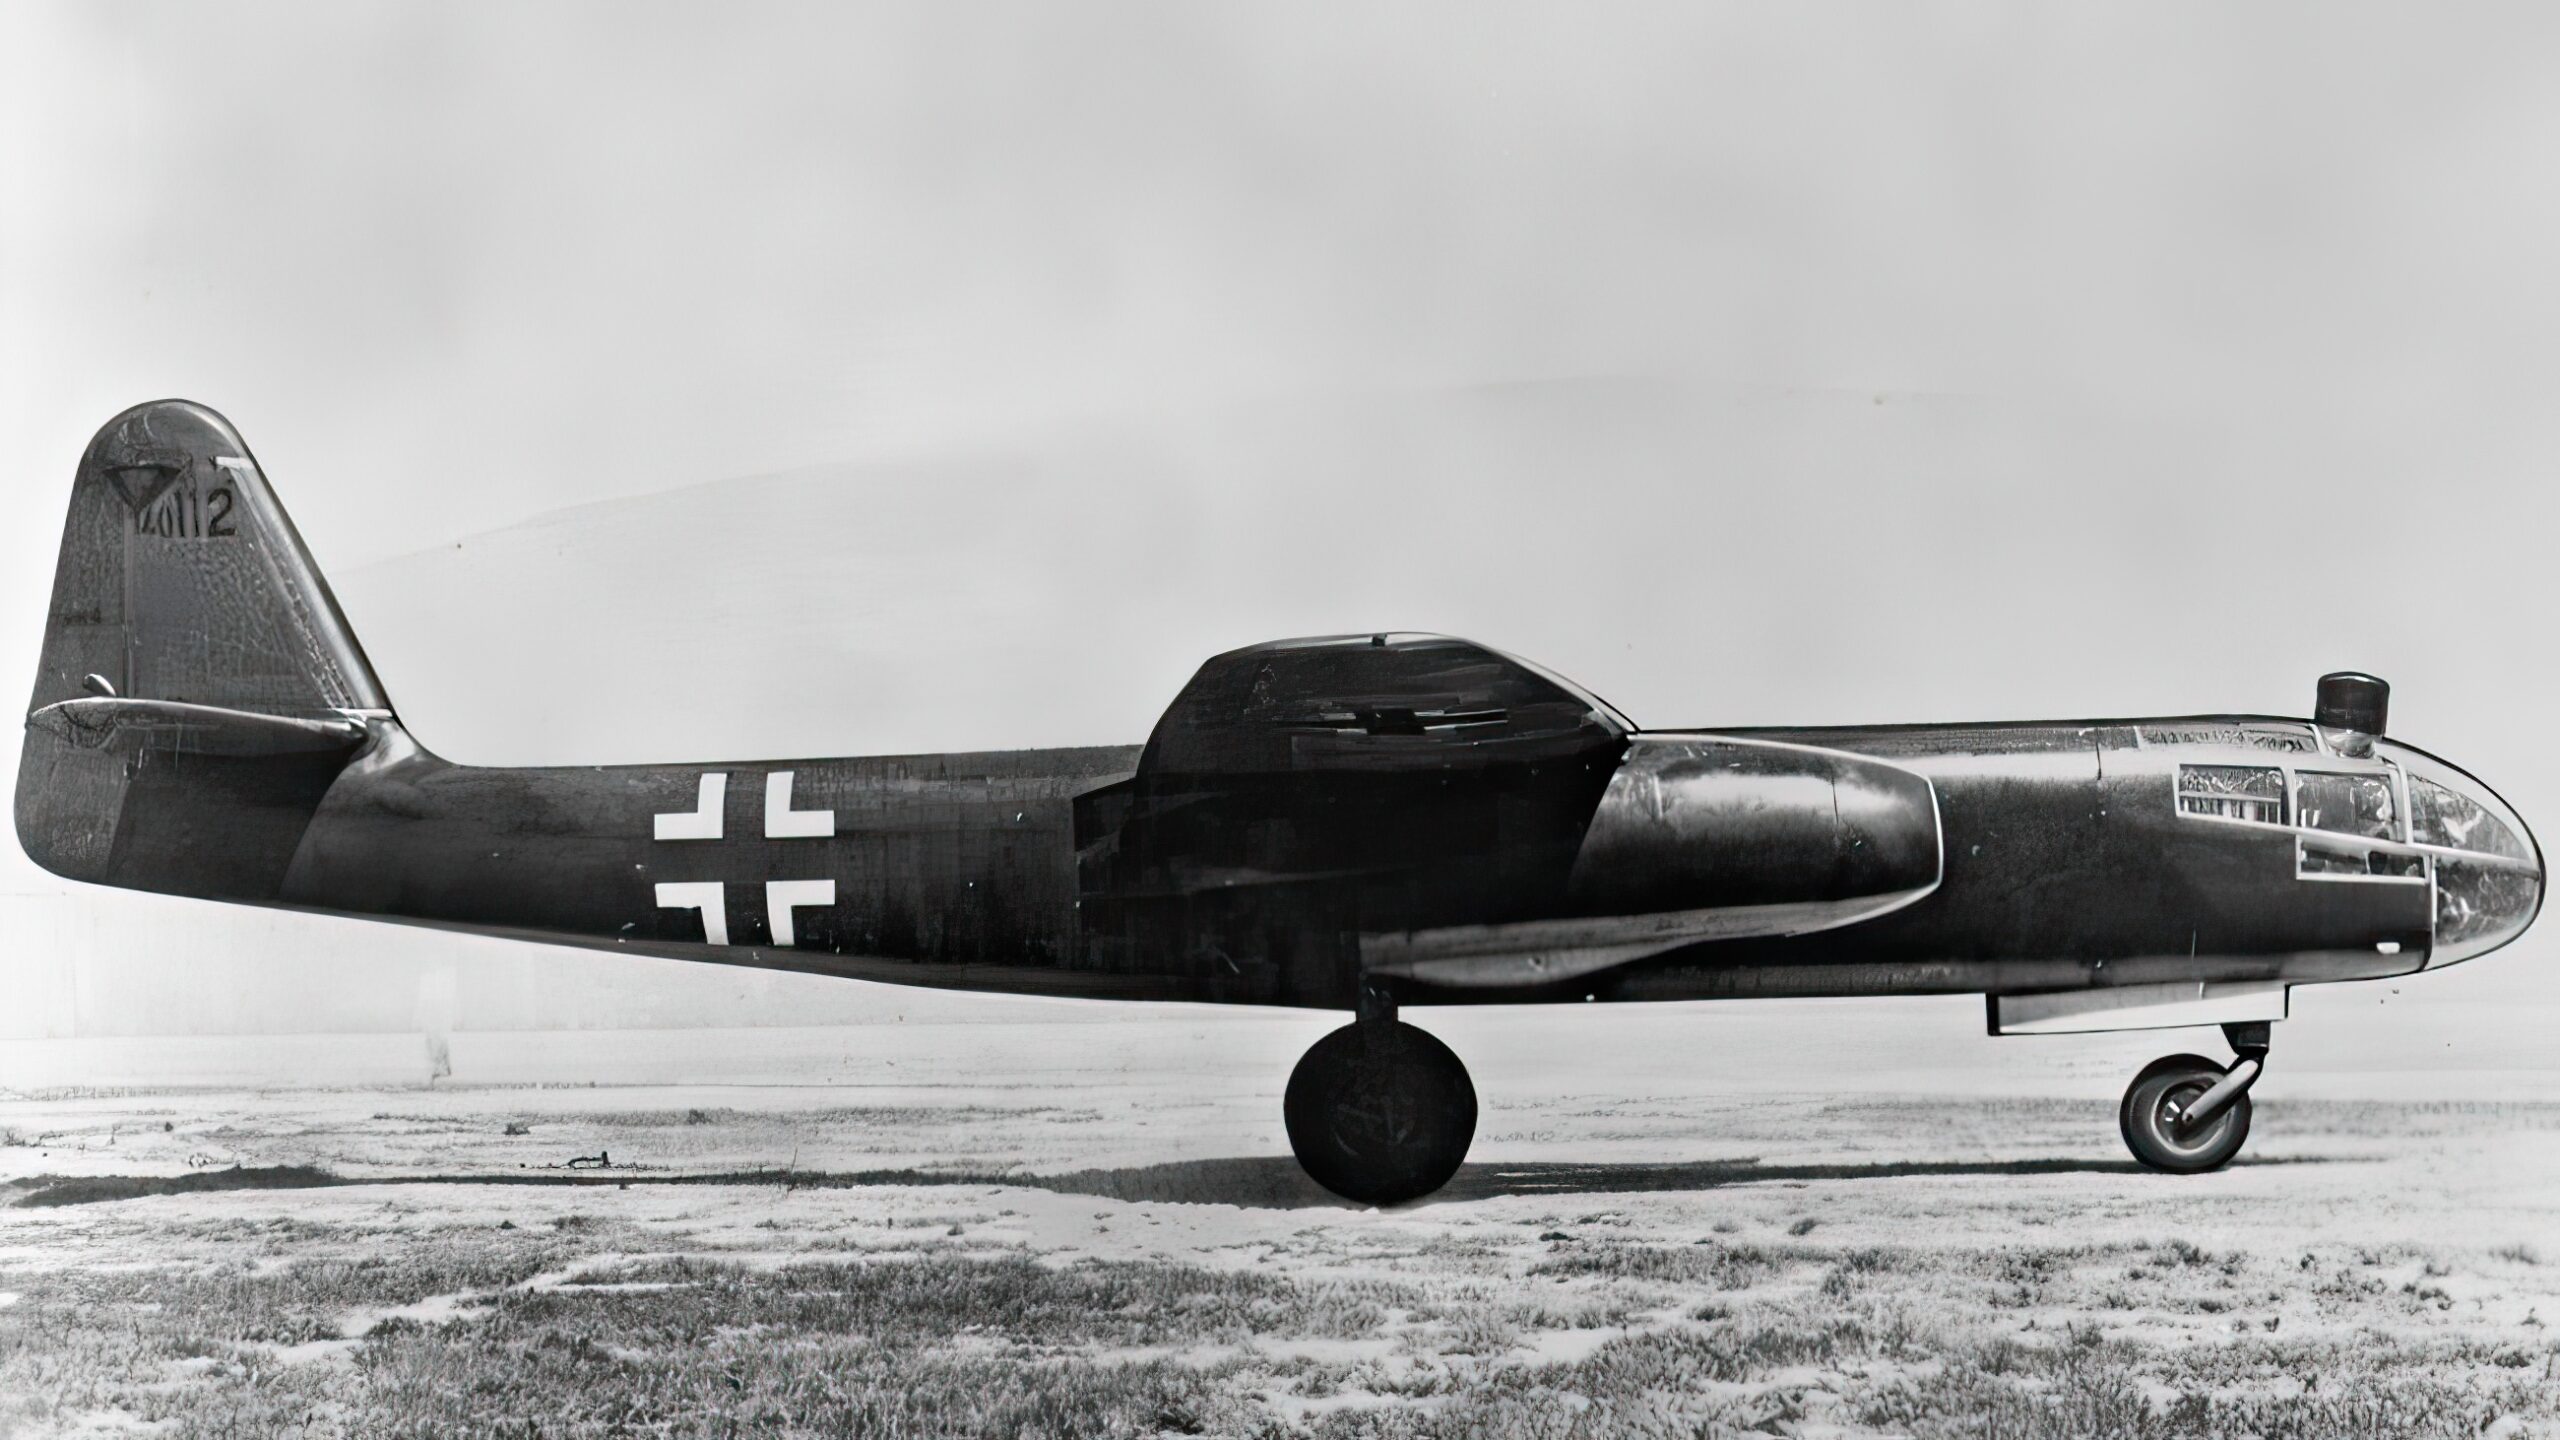 Arado Ar 234B-2 "Blitz" (Wk.Nr. 140112) jet bomber